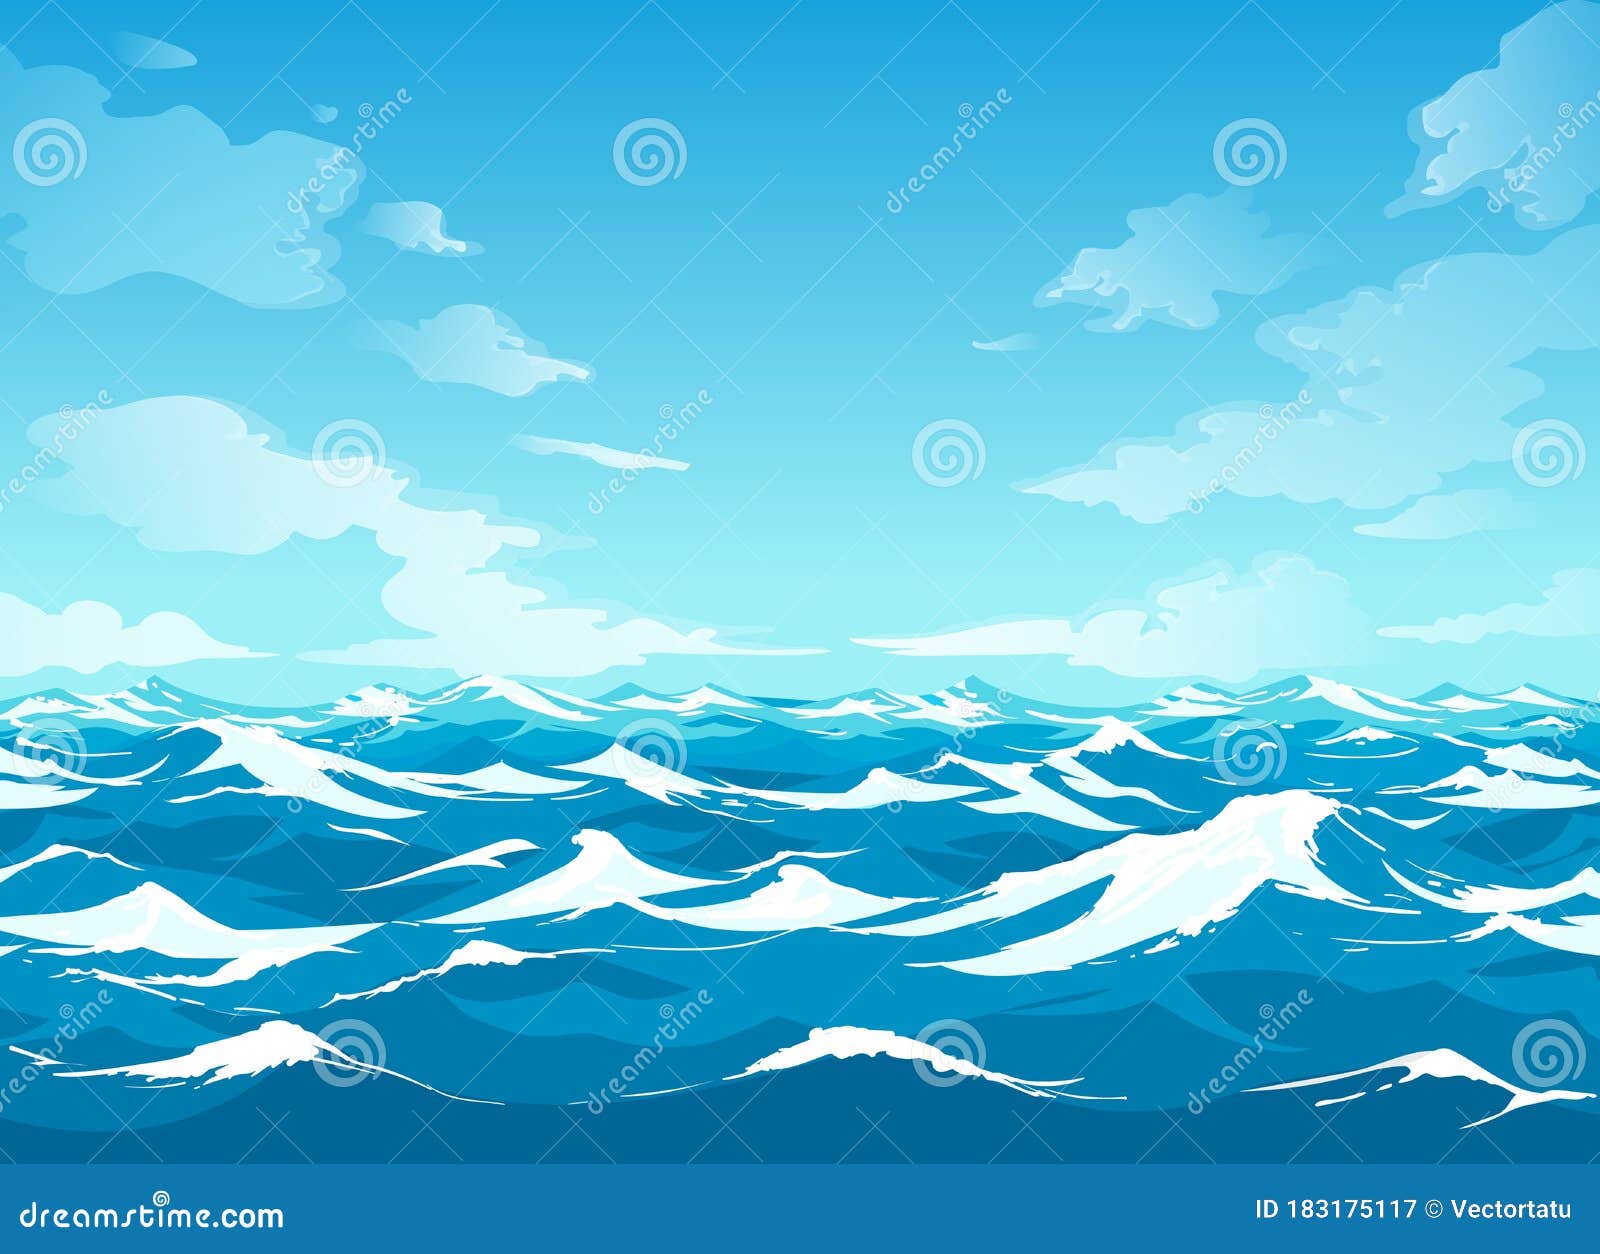 ocean surface waterscape